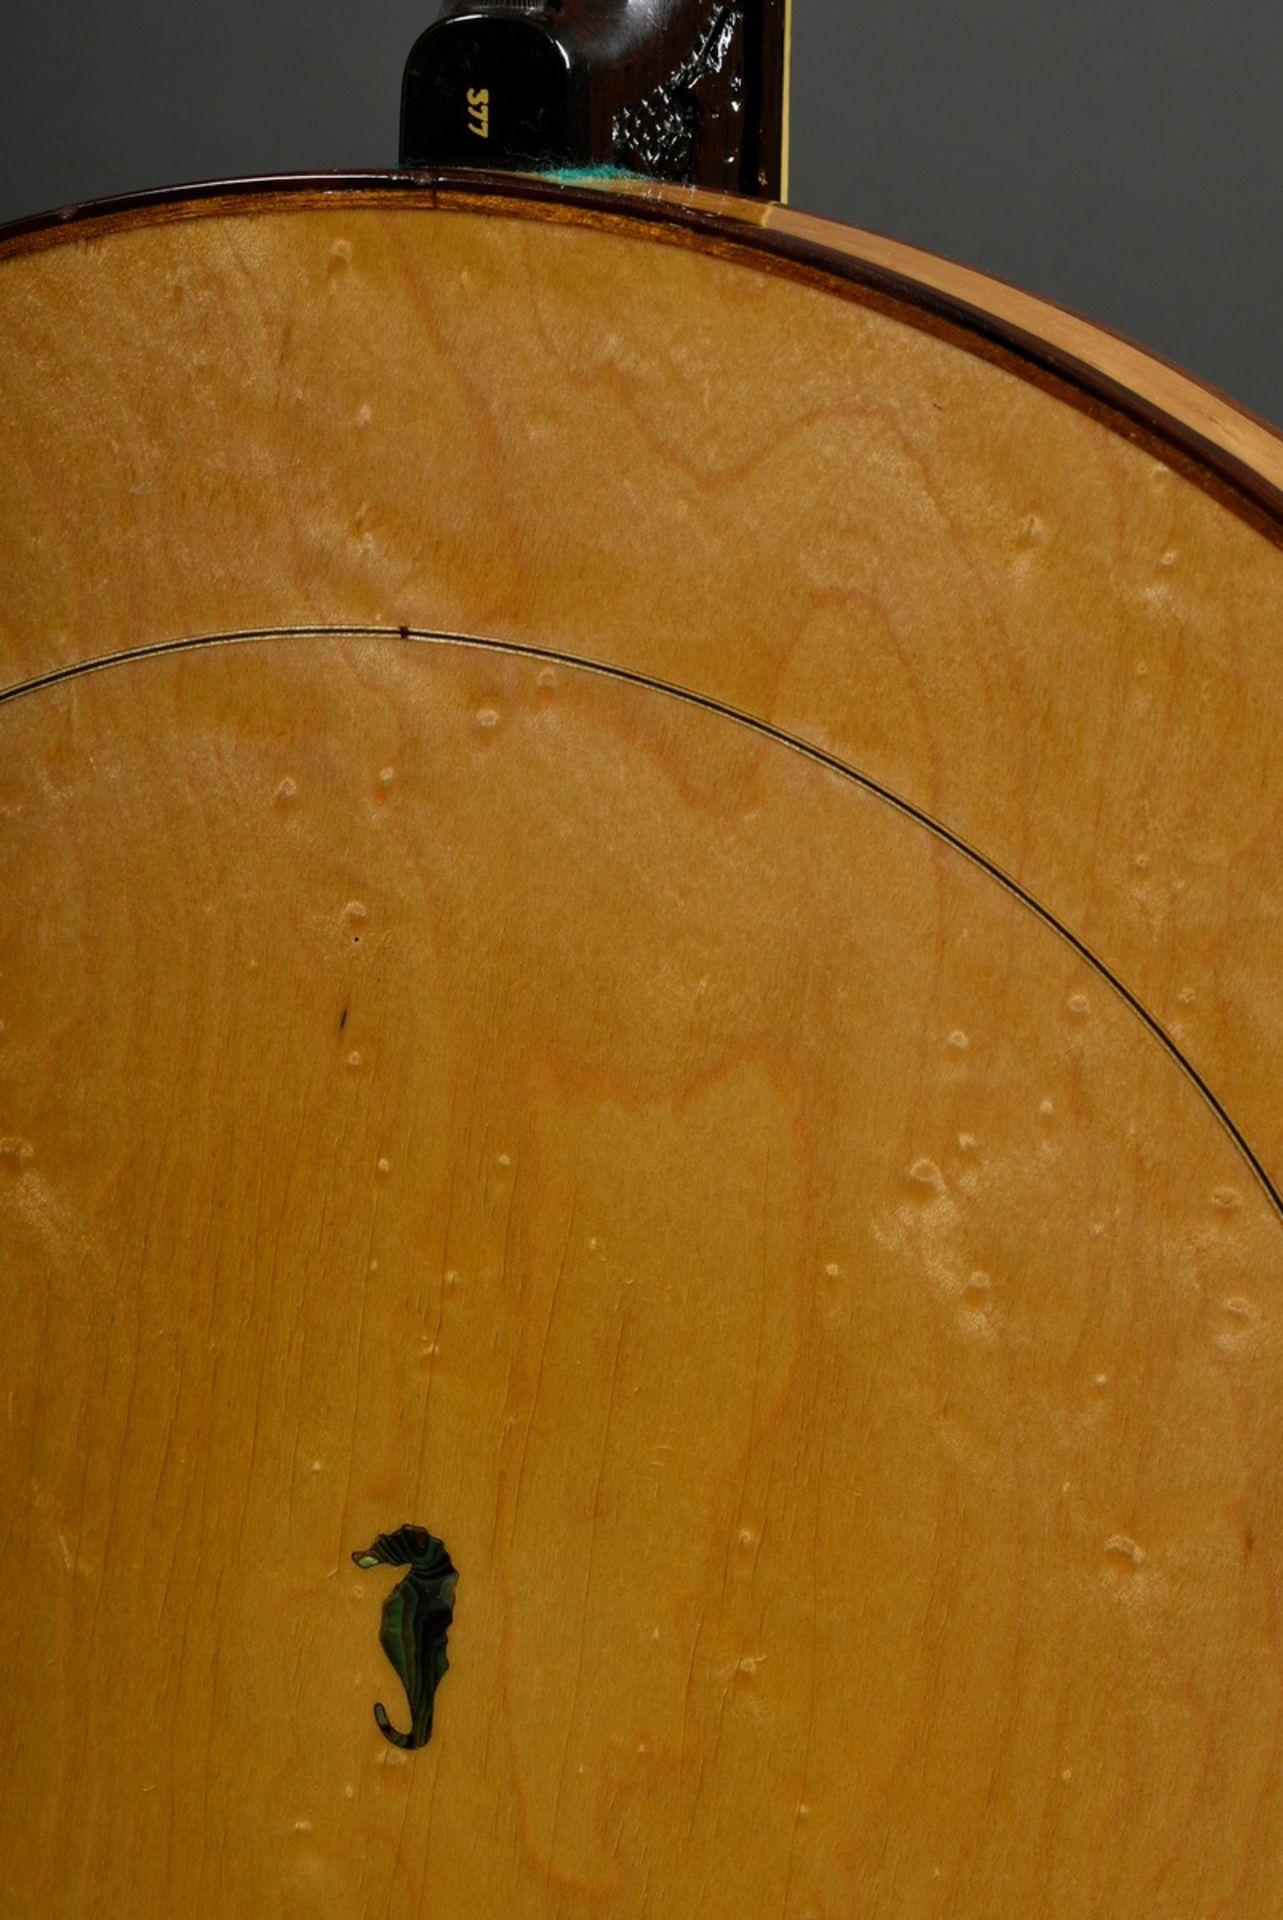 Plectrum banjo, Alf Parker, Cornwall / Great Britain, around 2000, serial number in the heel 377, c - Image 8 of 25